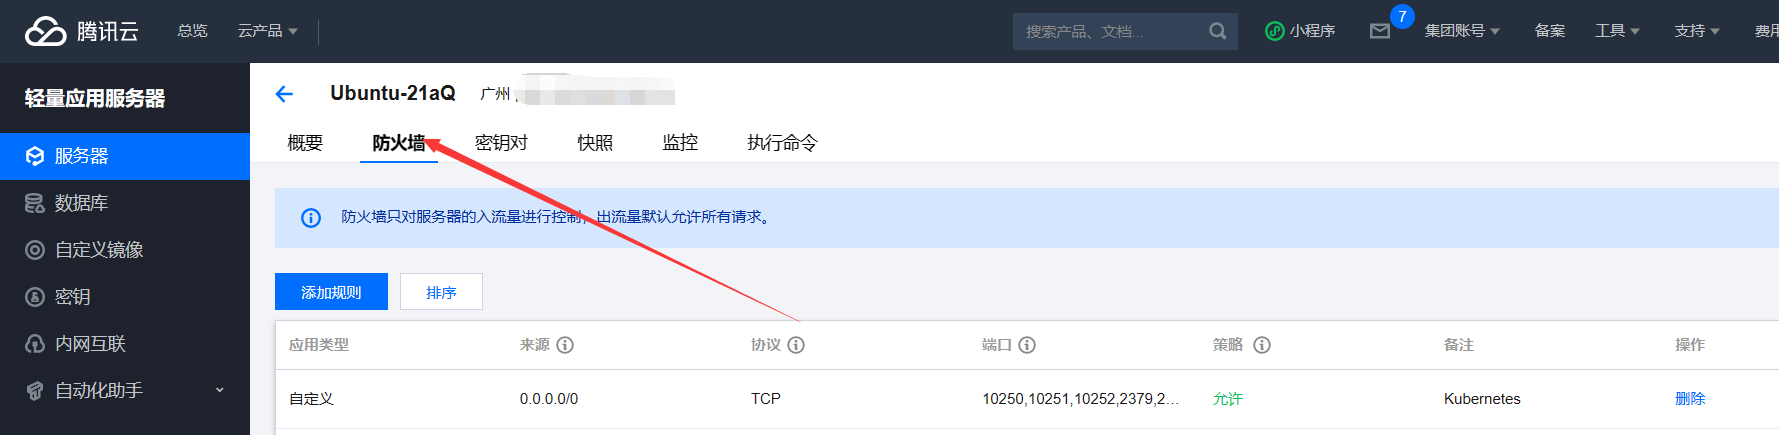 Tencent Cloud Worker Node